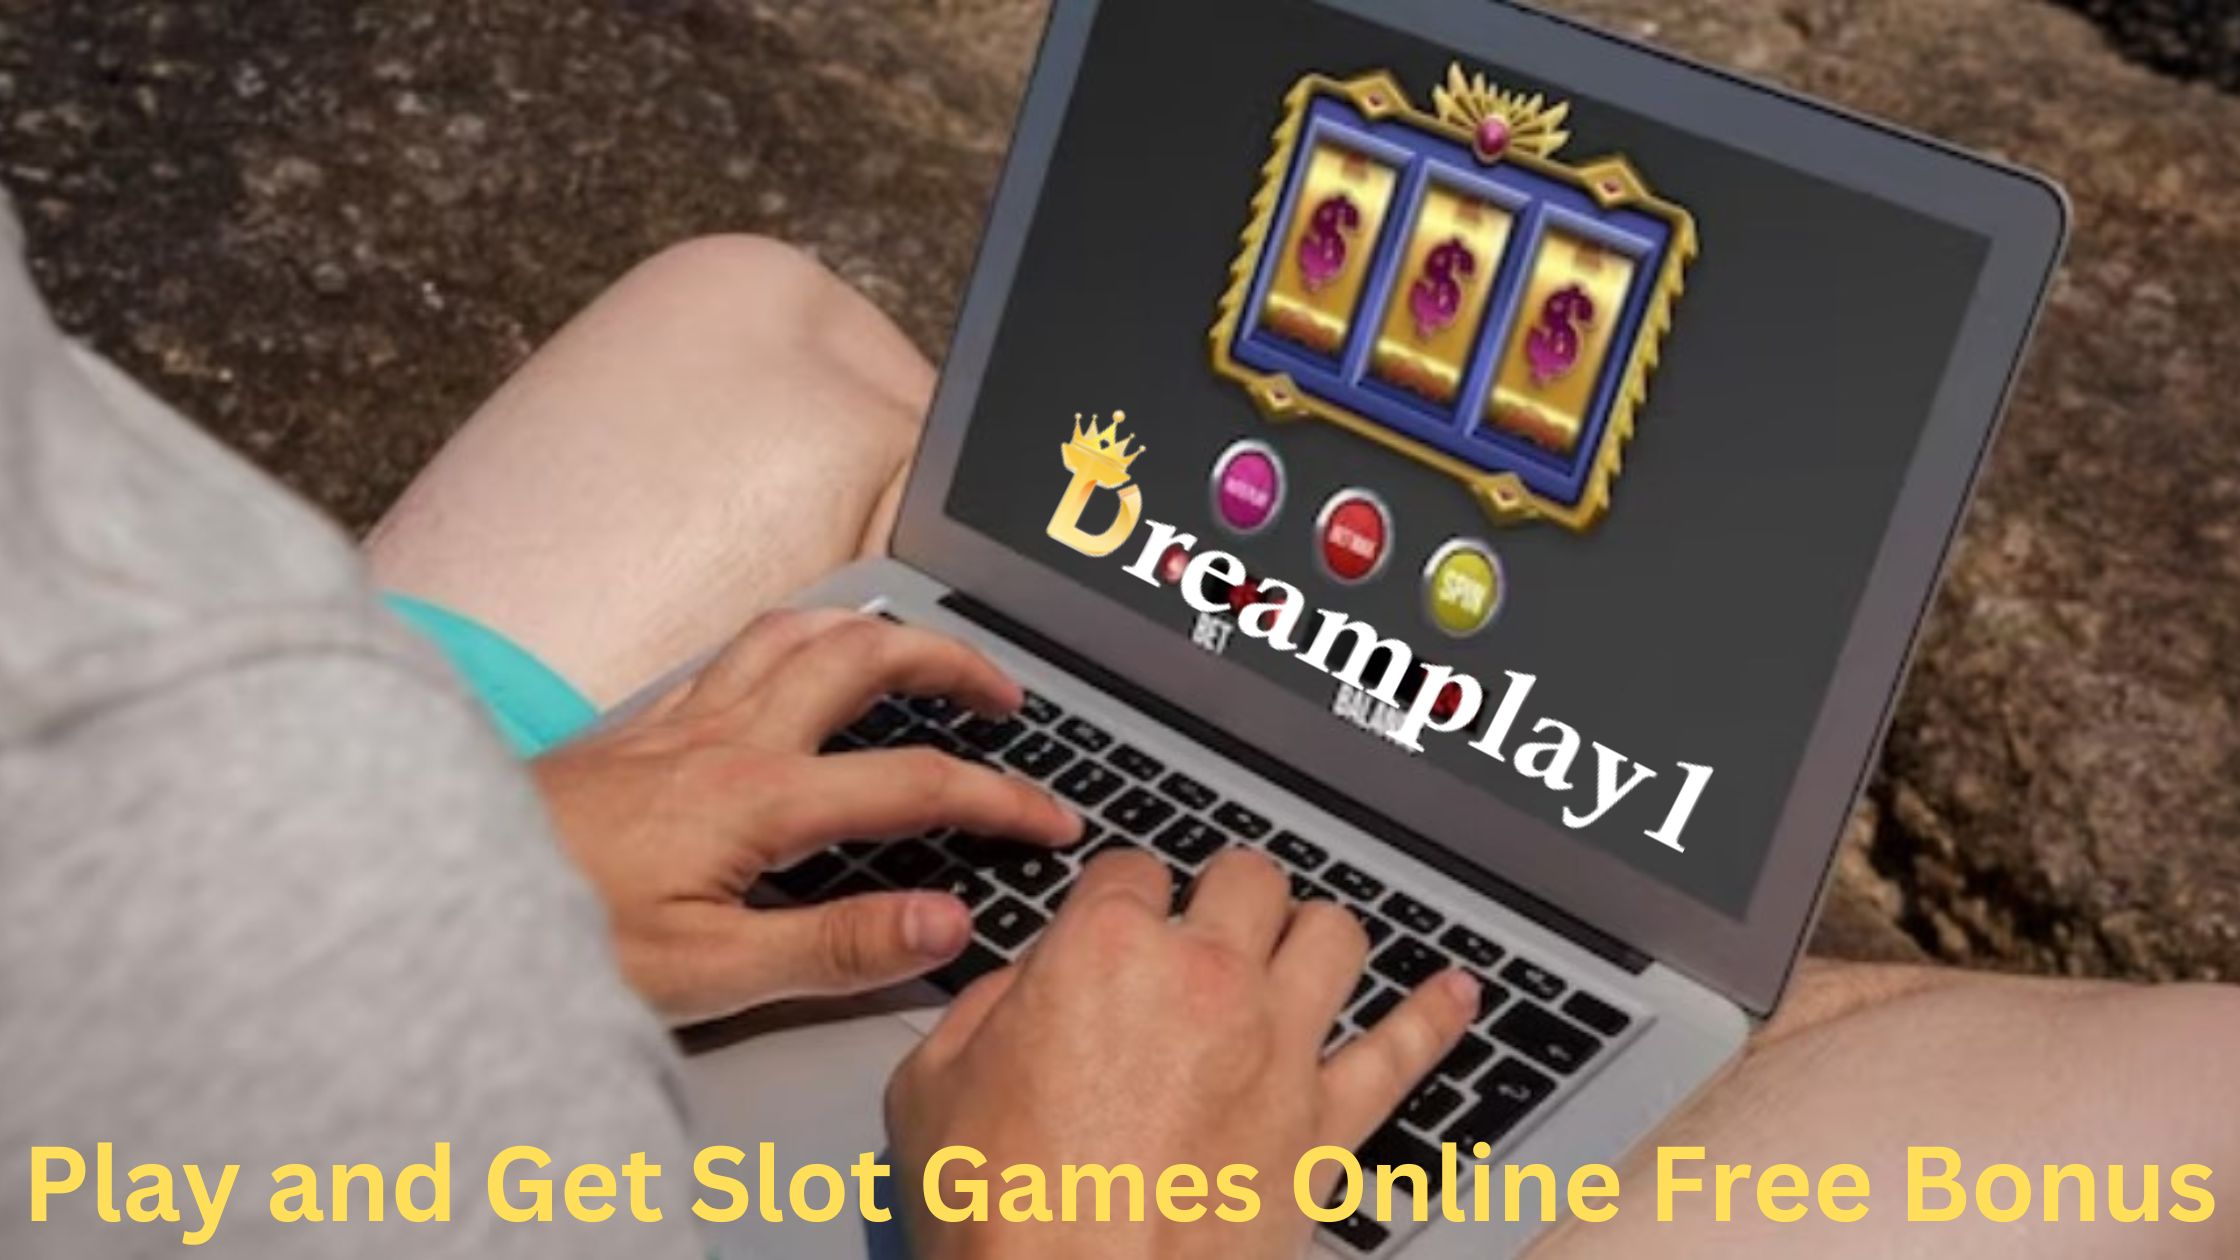 Play and Get Slot Games Online Free Bonus